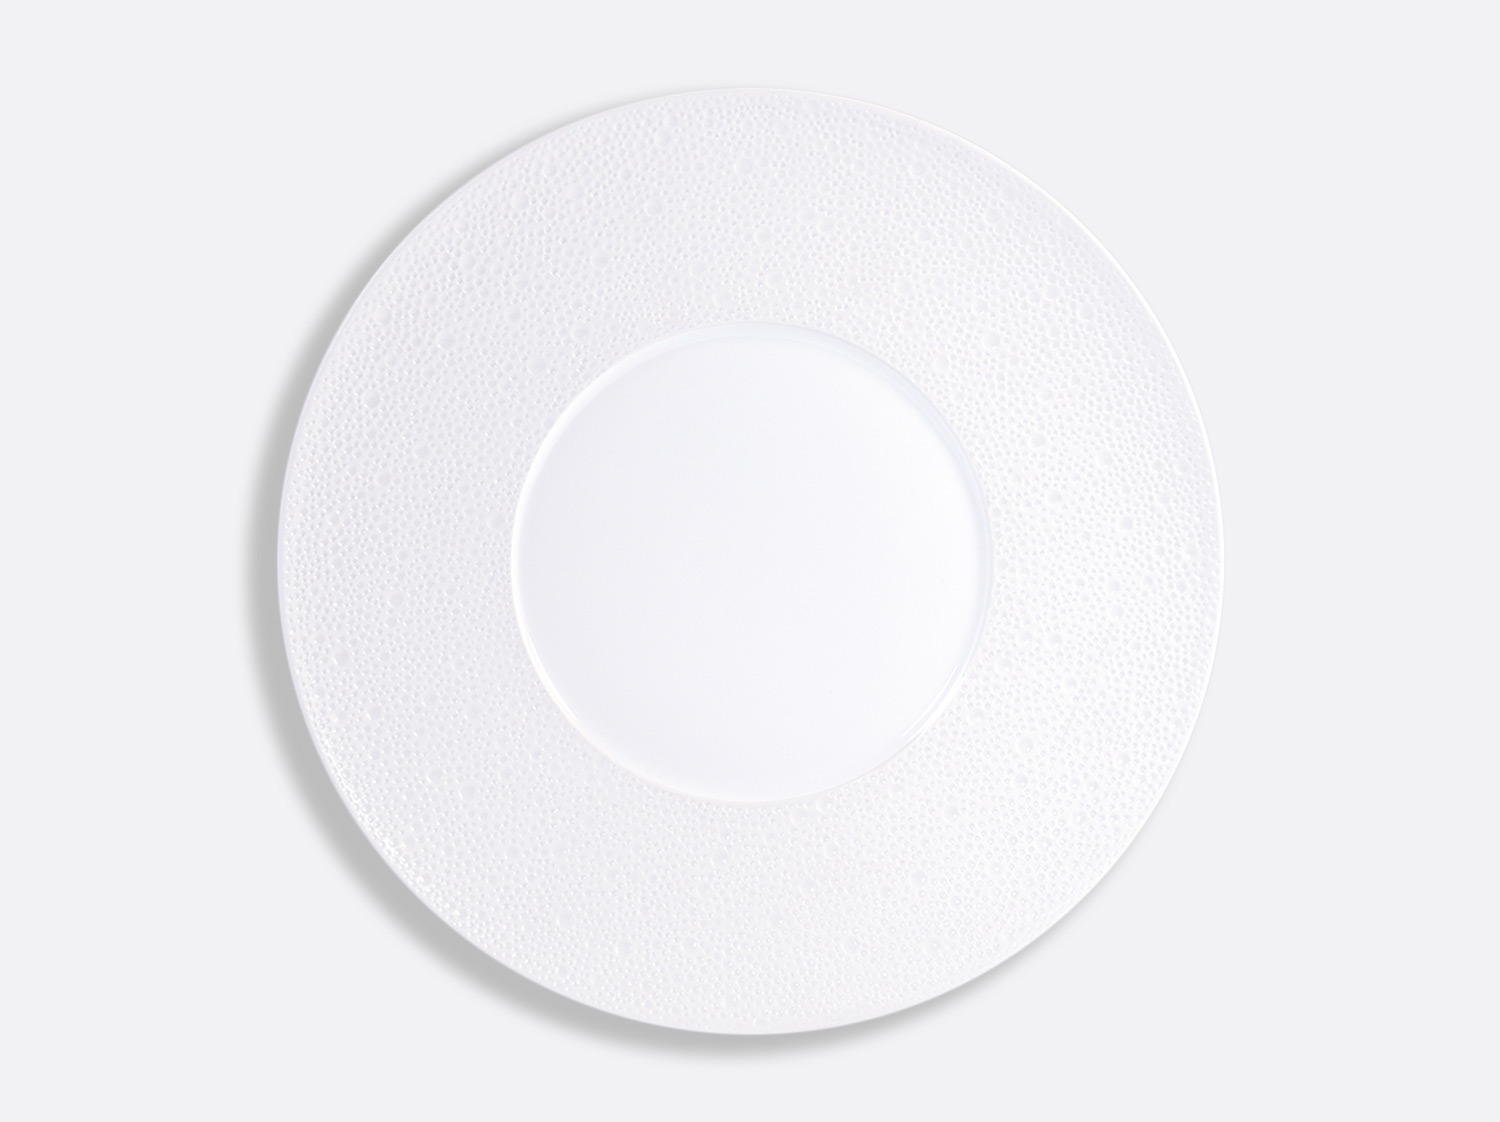 China Shogun plate 31.5 cm of the collection Ecume blanc aile mat | Bernardaud